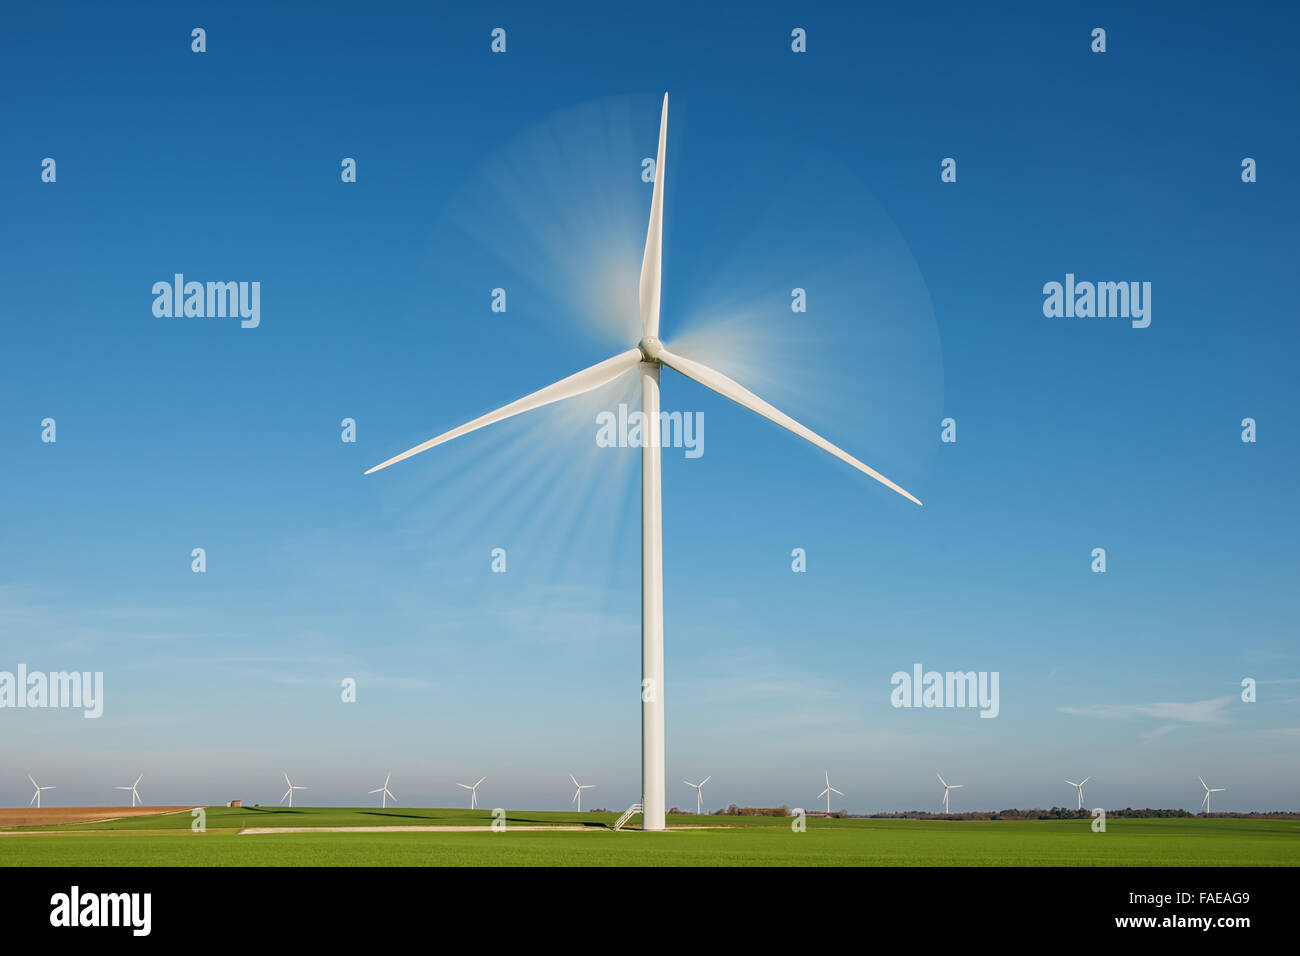 wind turbine with rotation effect on blue sky backround Stock Photo